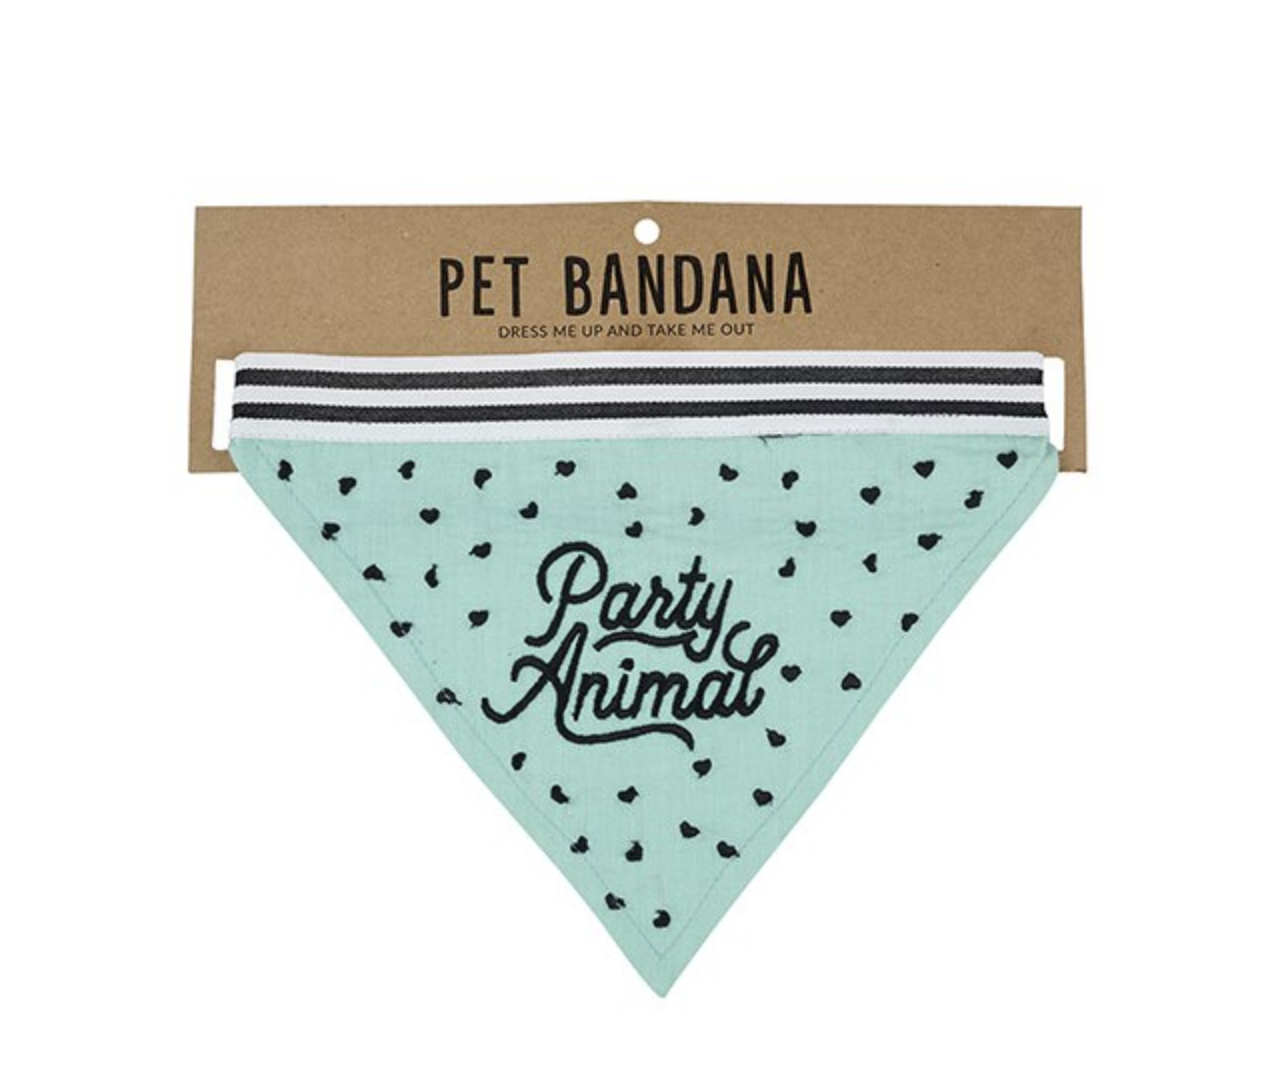 Creative Brands Party Animal Pet Bandana